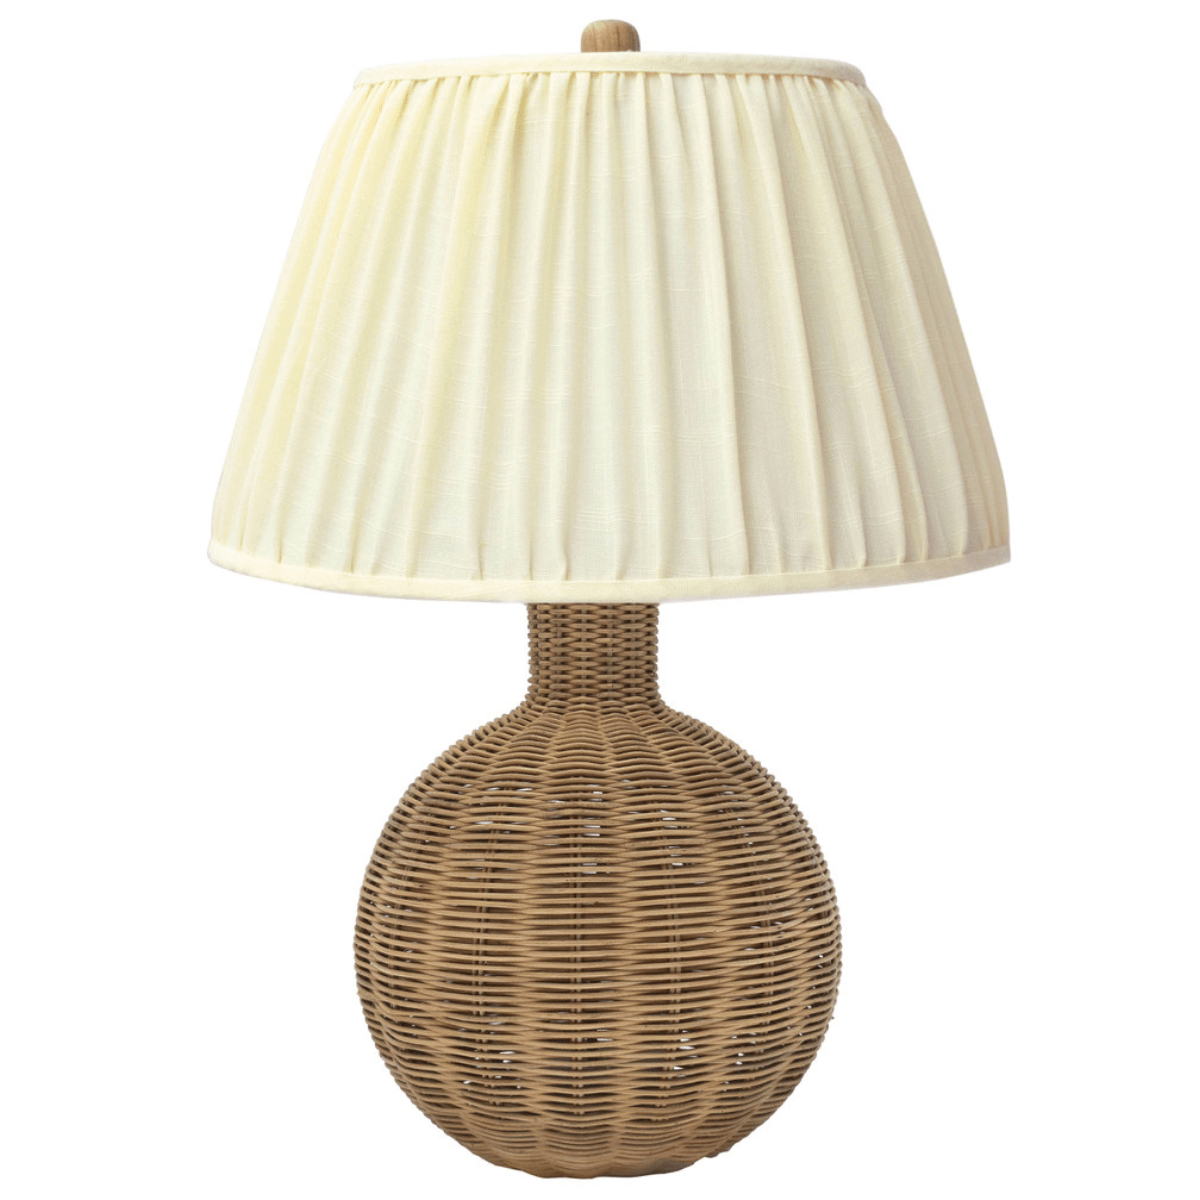 Shem Cream & Natural Rattan Table Lamp Table Lamps TOV-G54336